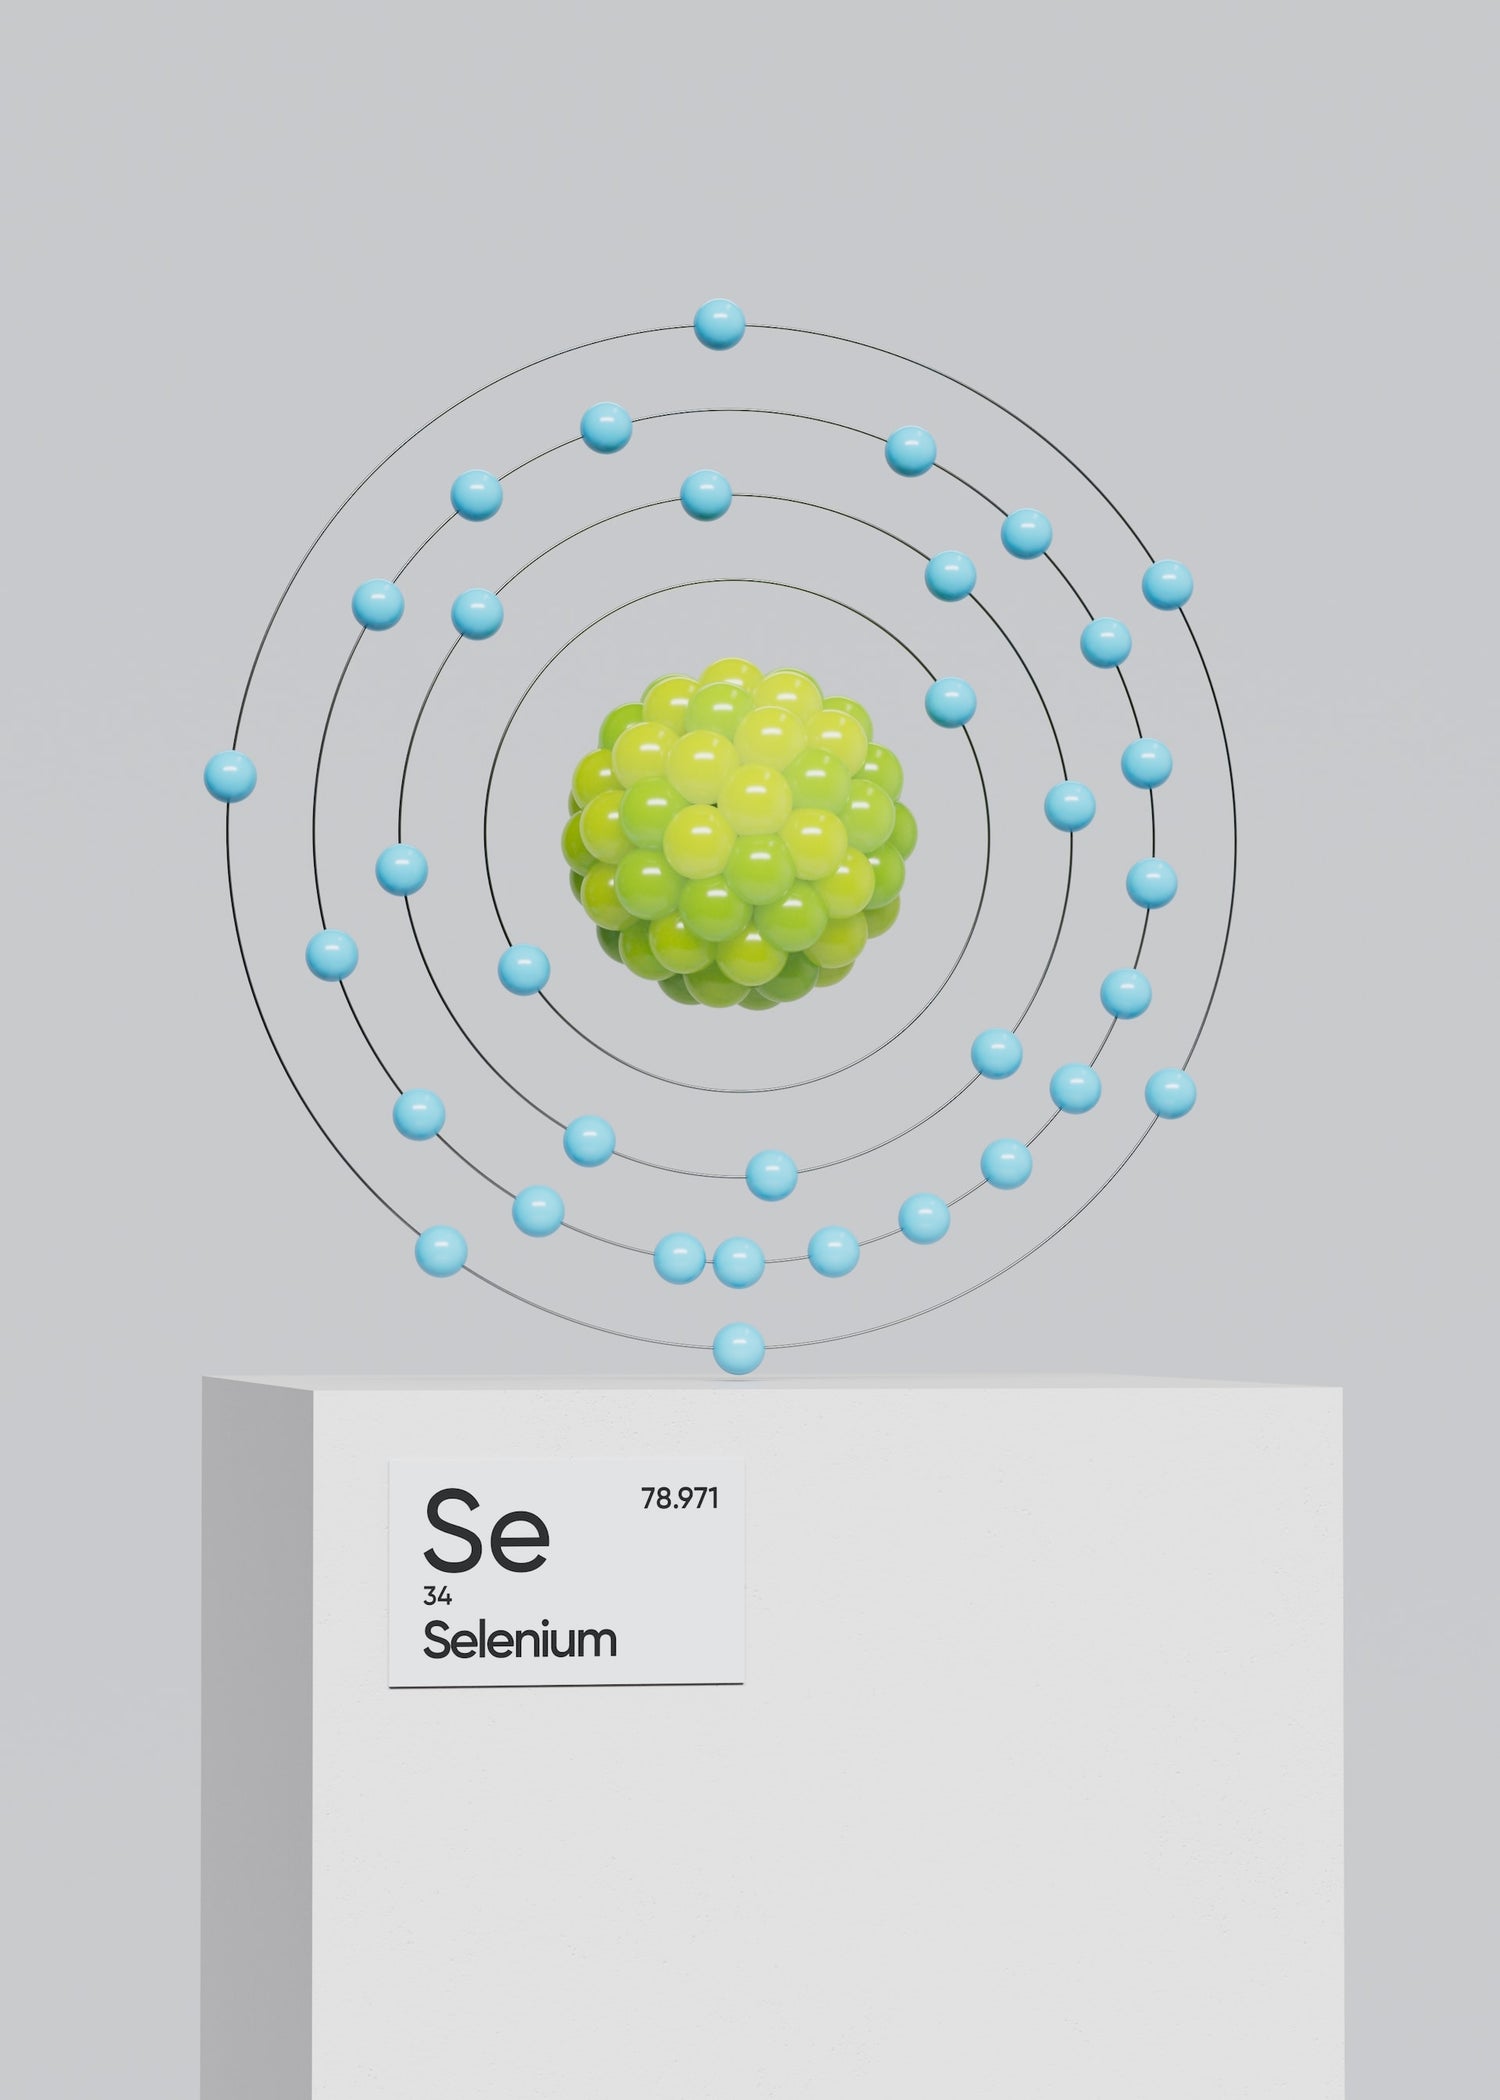 Selenium: Function, Benefits